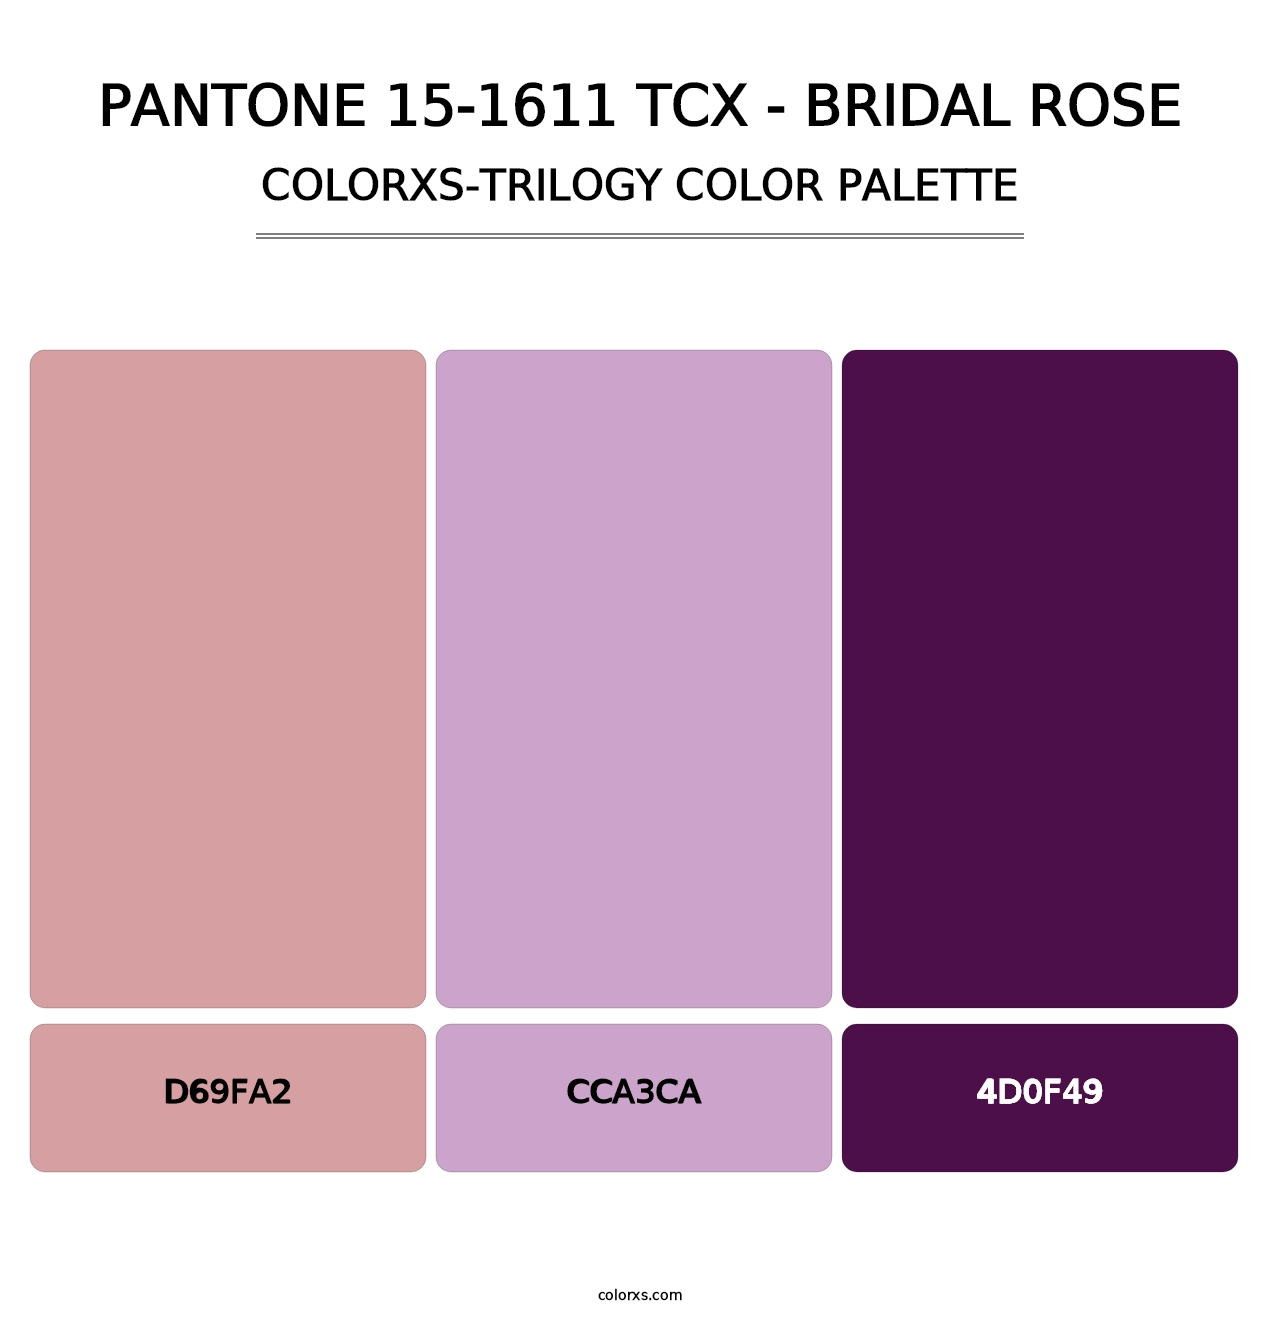 PANTONE 15-1611 TCX - Bridal Rose - Colorxs Trilogy Palette